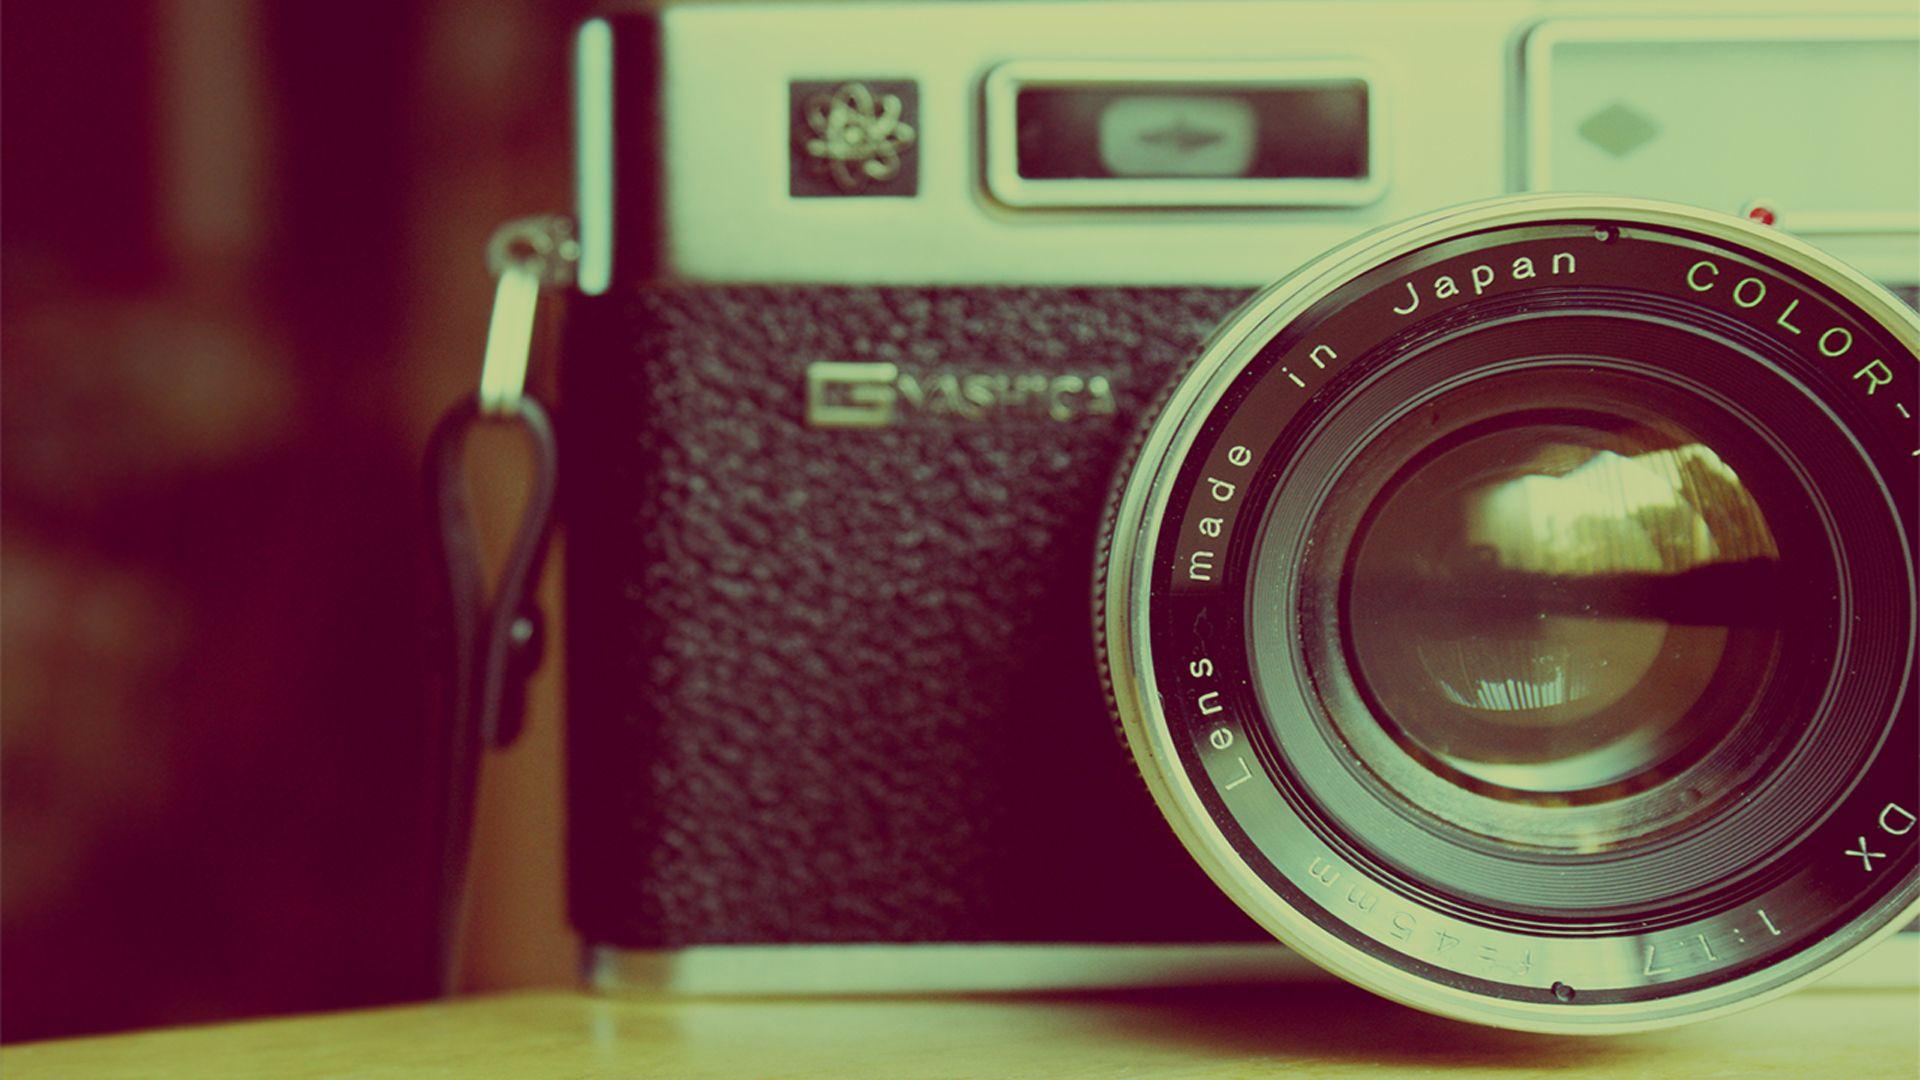 Download the Vintage Camera Wallpaper, Vintage Camera iPhone